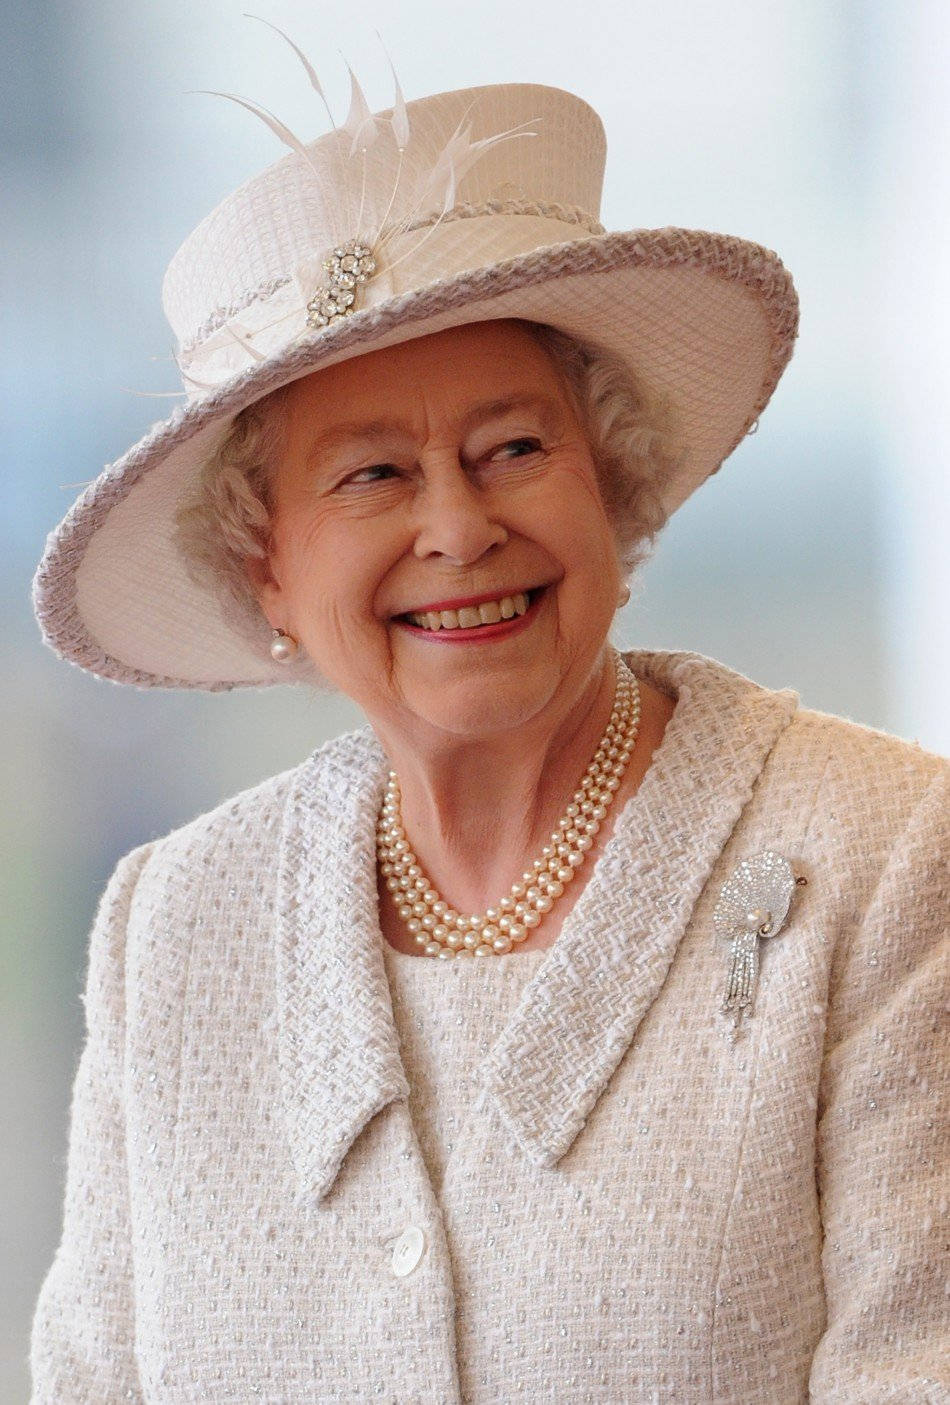 Queen Elizabeth Pearl Necklace Background